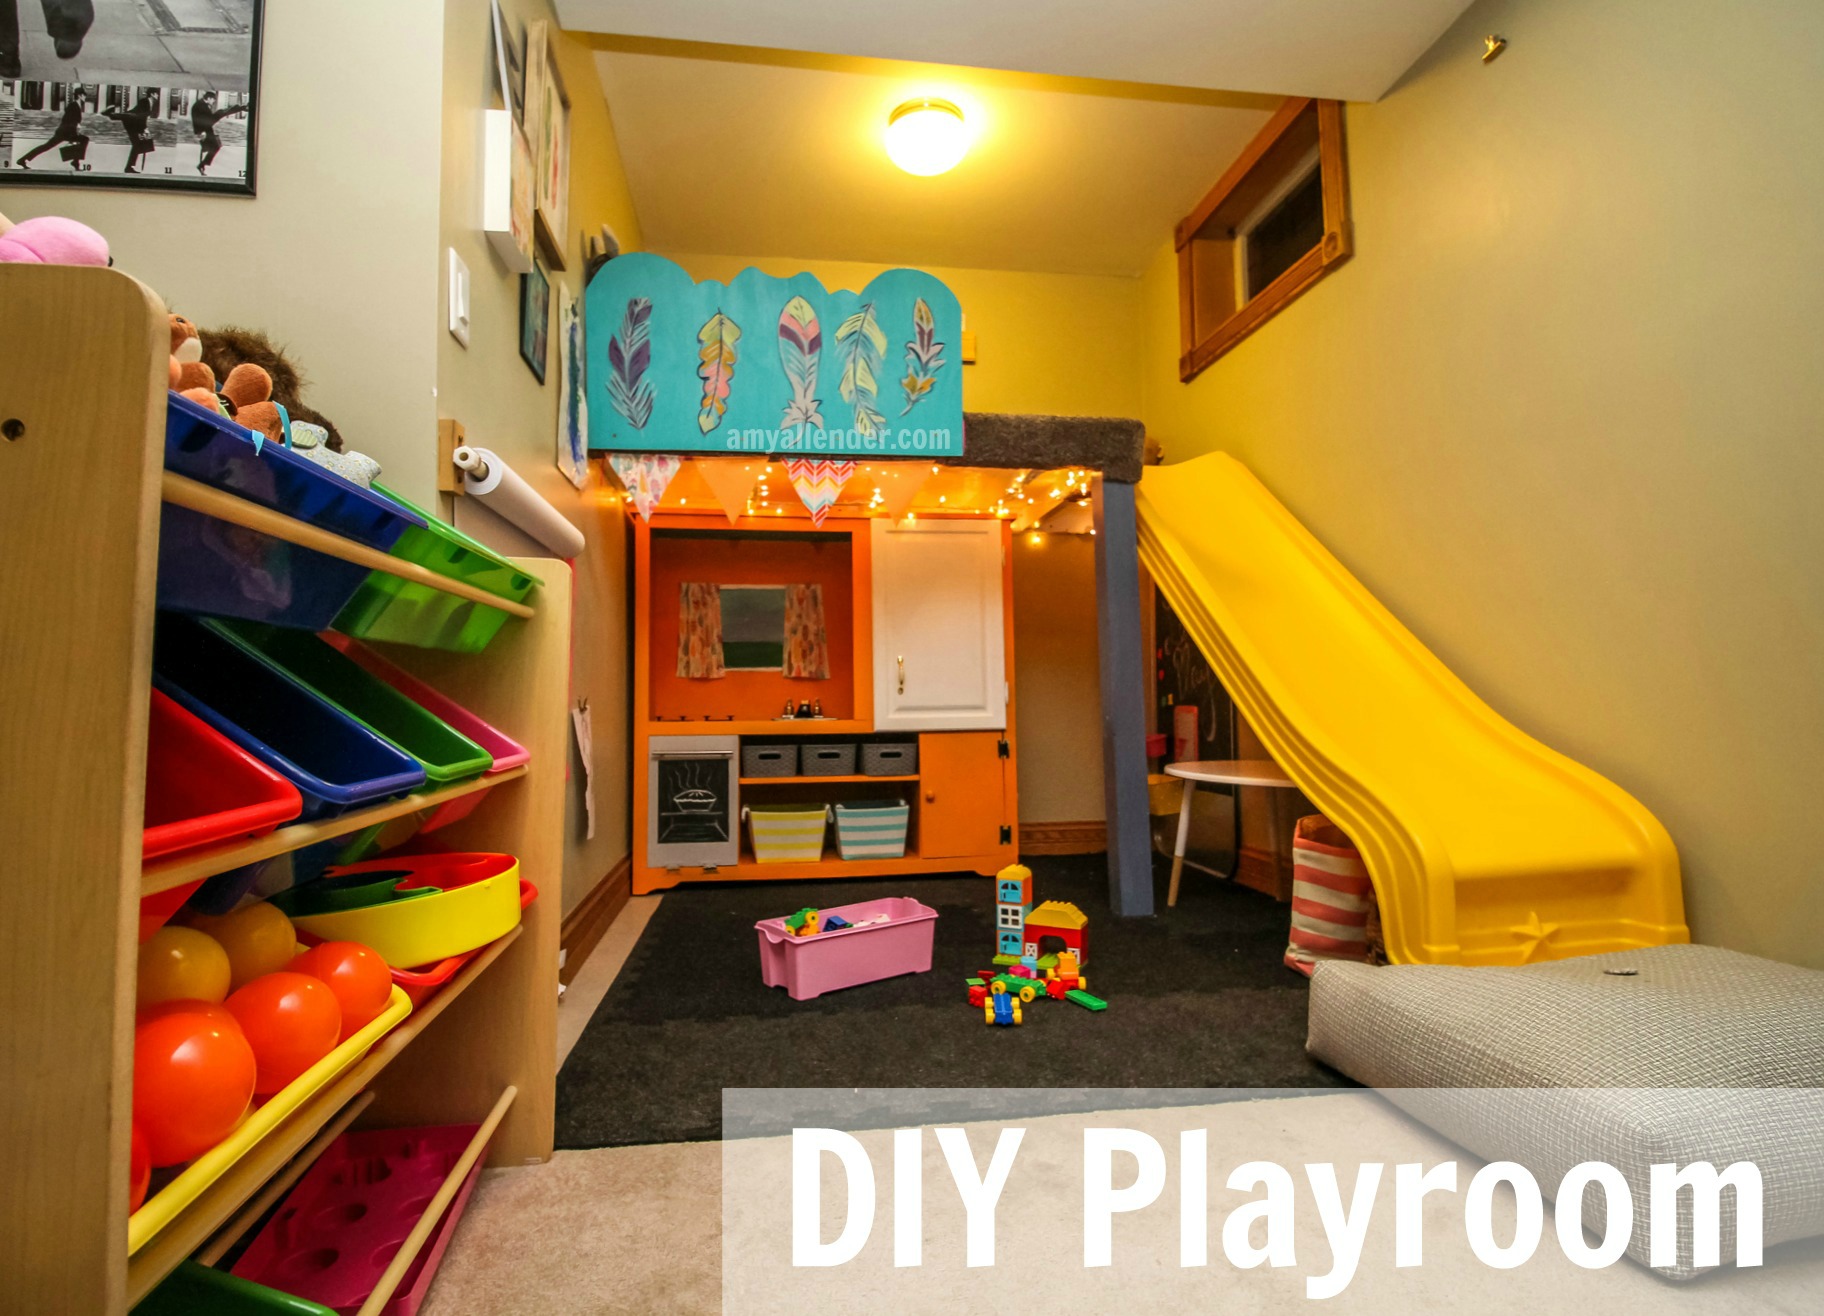 DIY Playroom